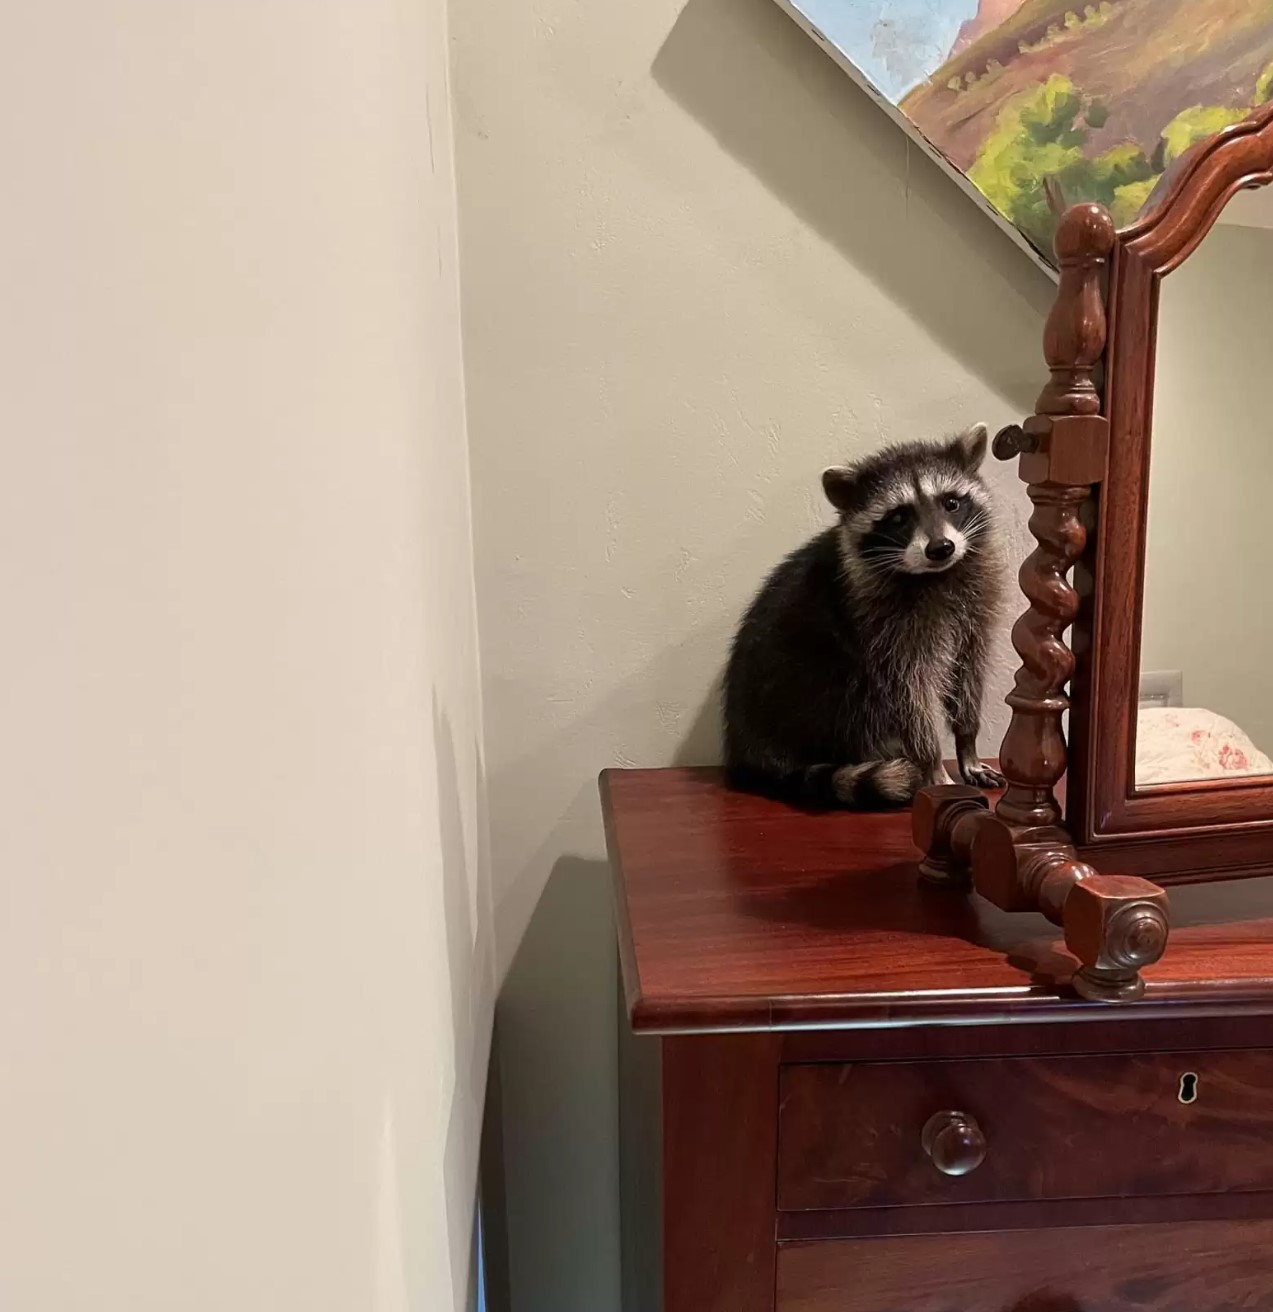 raccoon sitting in the room